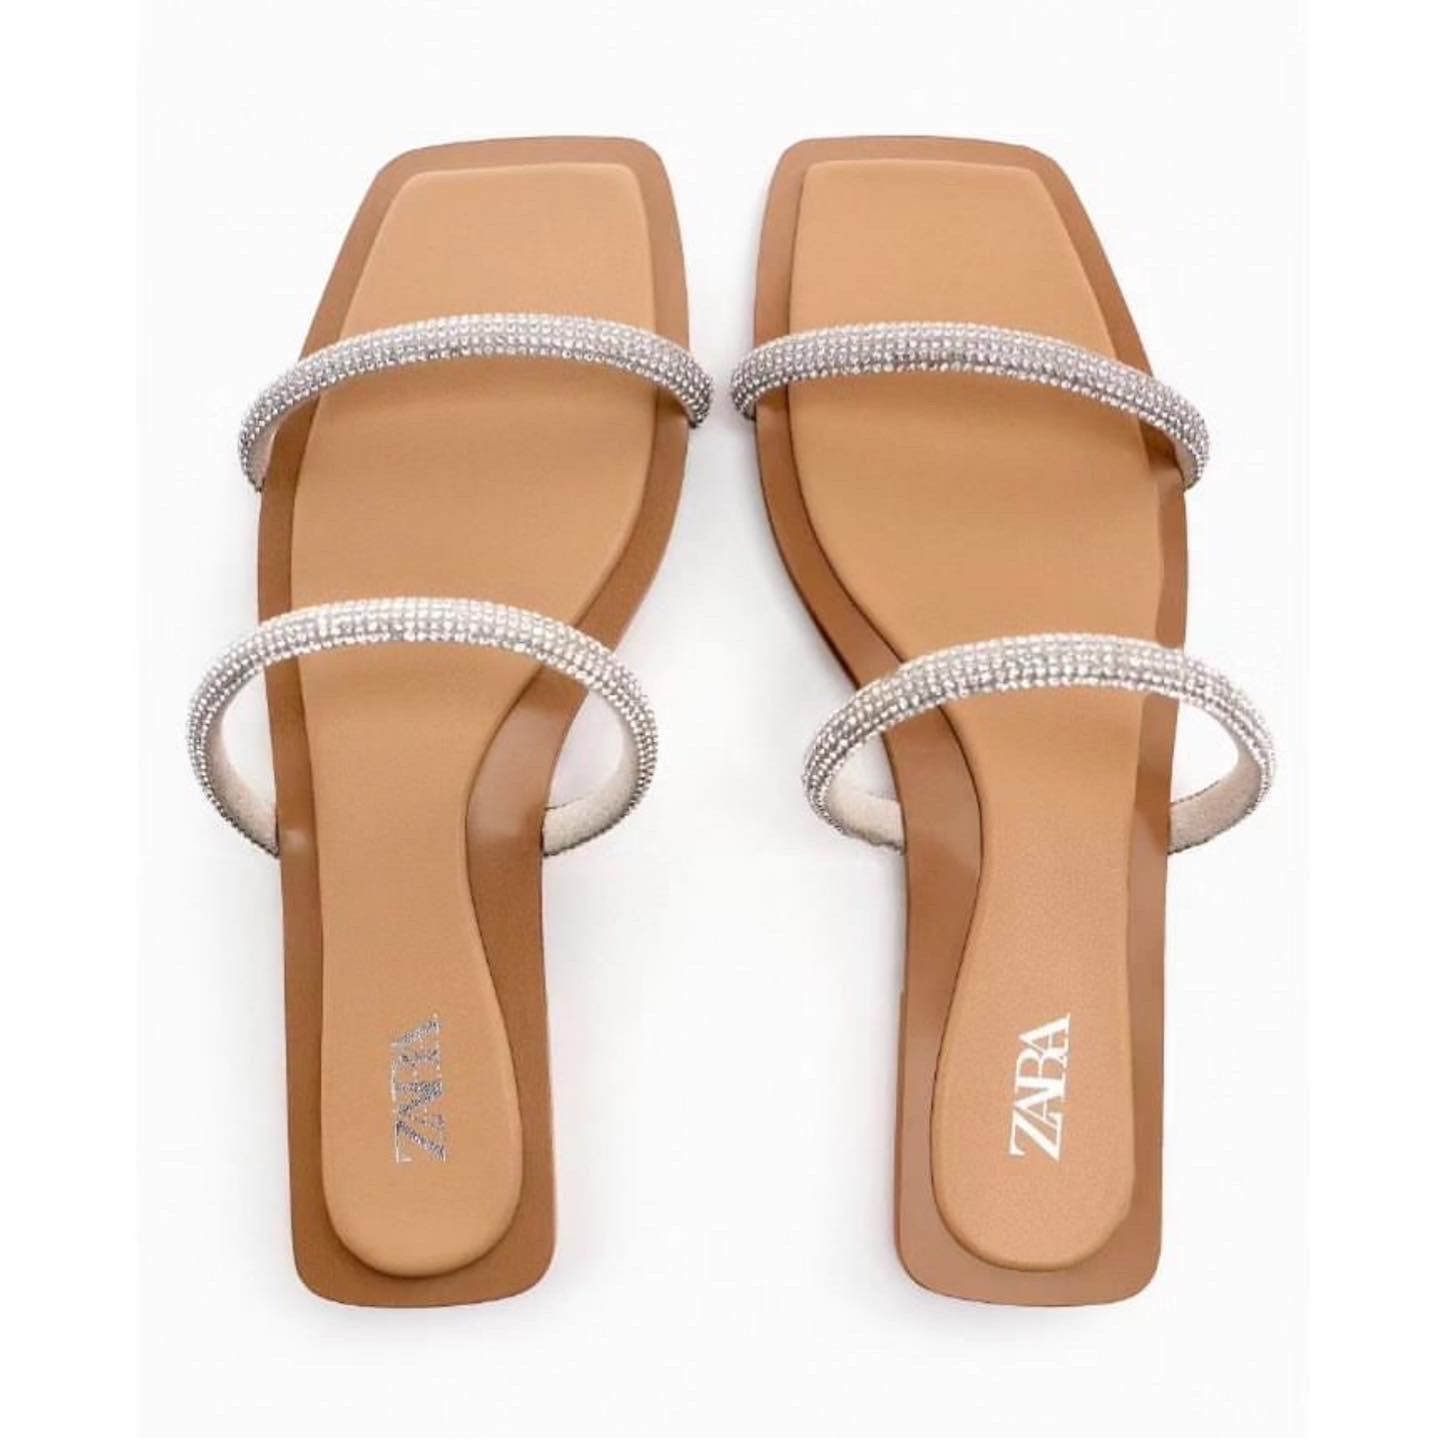 Zara Sandals for Women for sale | eBay-sgquangbinhtourist.com.vn